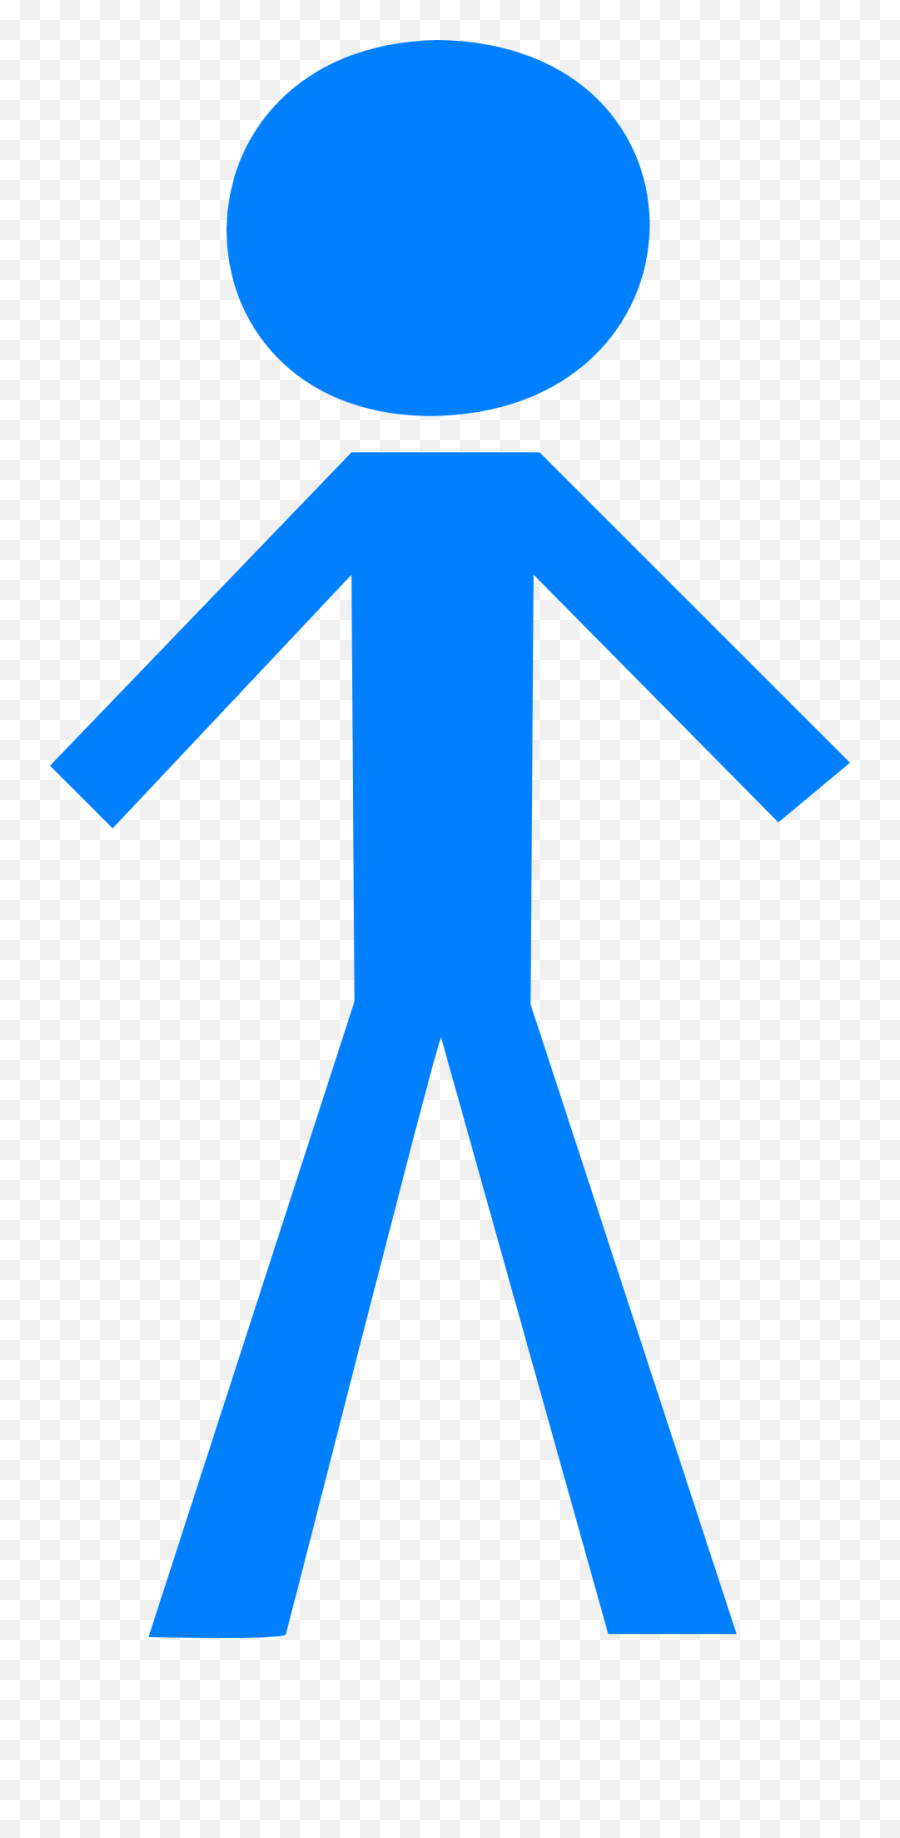 Stick - Man Public Domain Image Search Freeimg Blue Stick Man Emoji,Dancing Man Emoticon Text